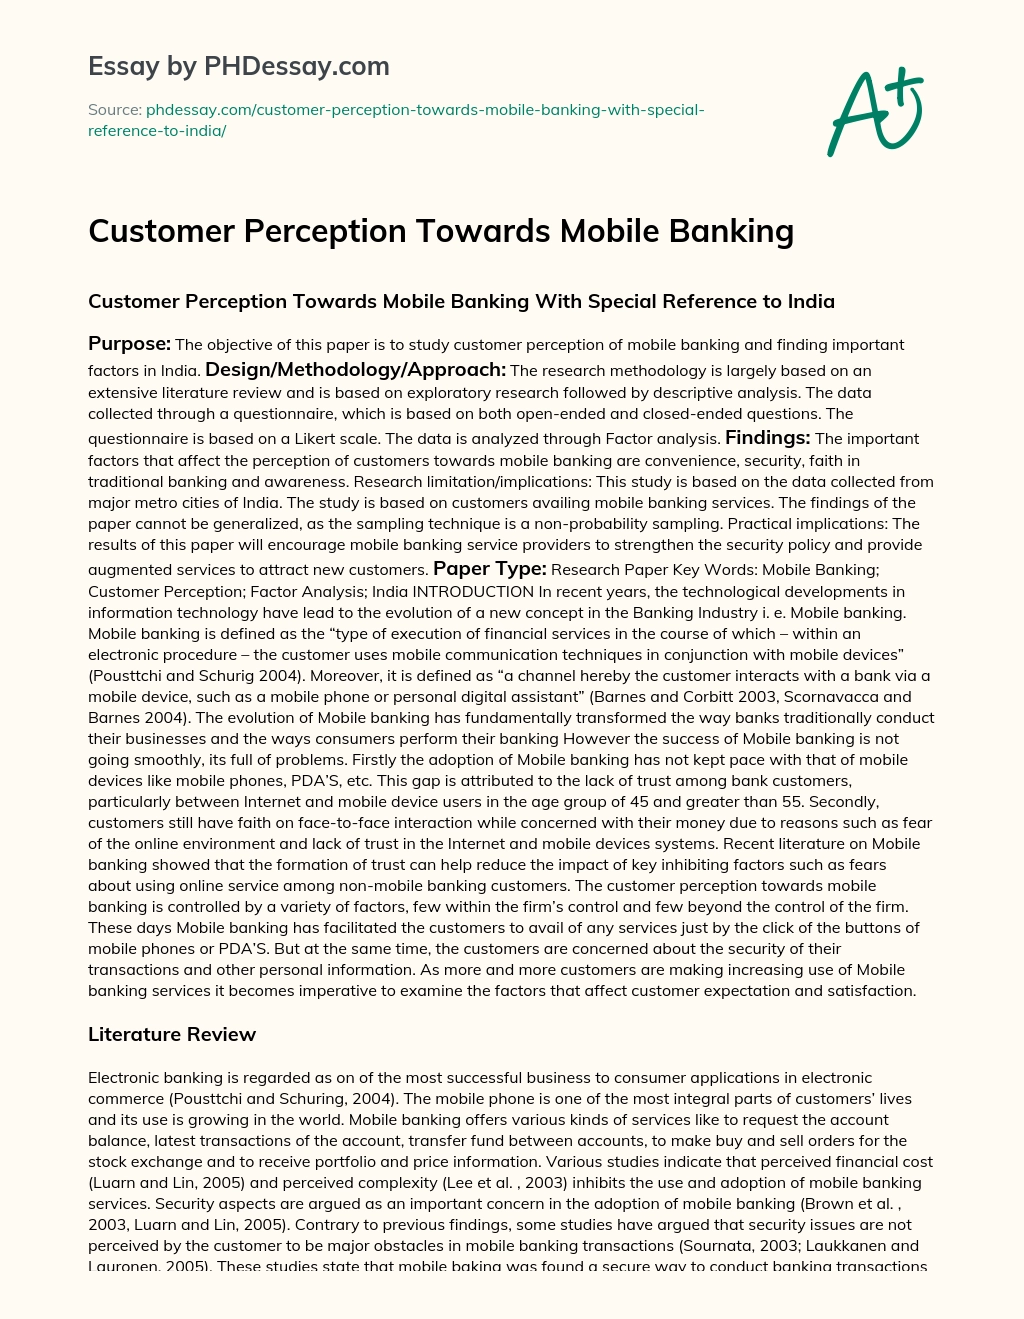 Customer Perception Towards Mobile Banking essay